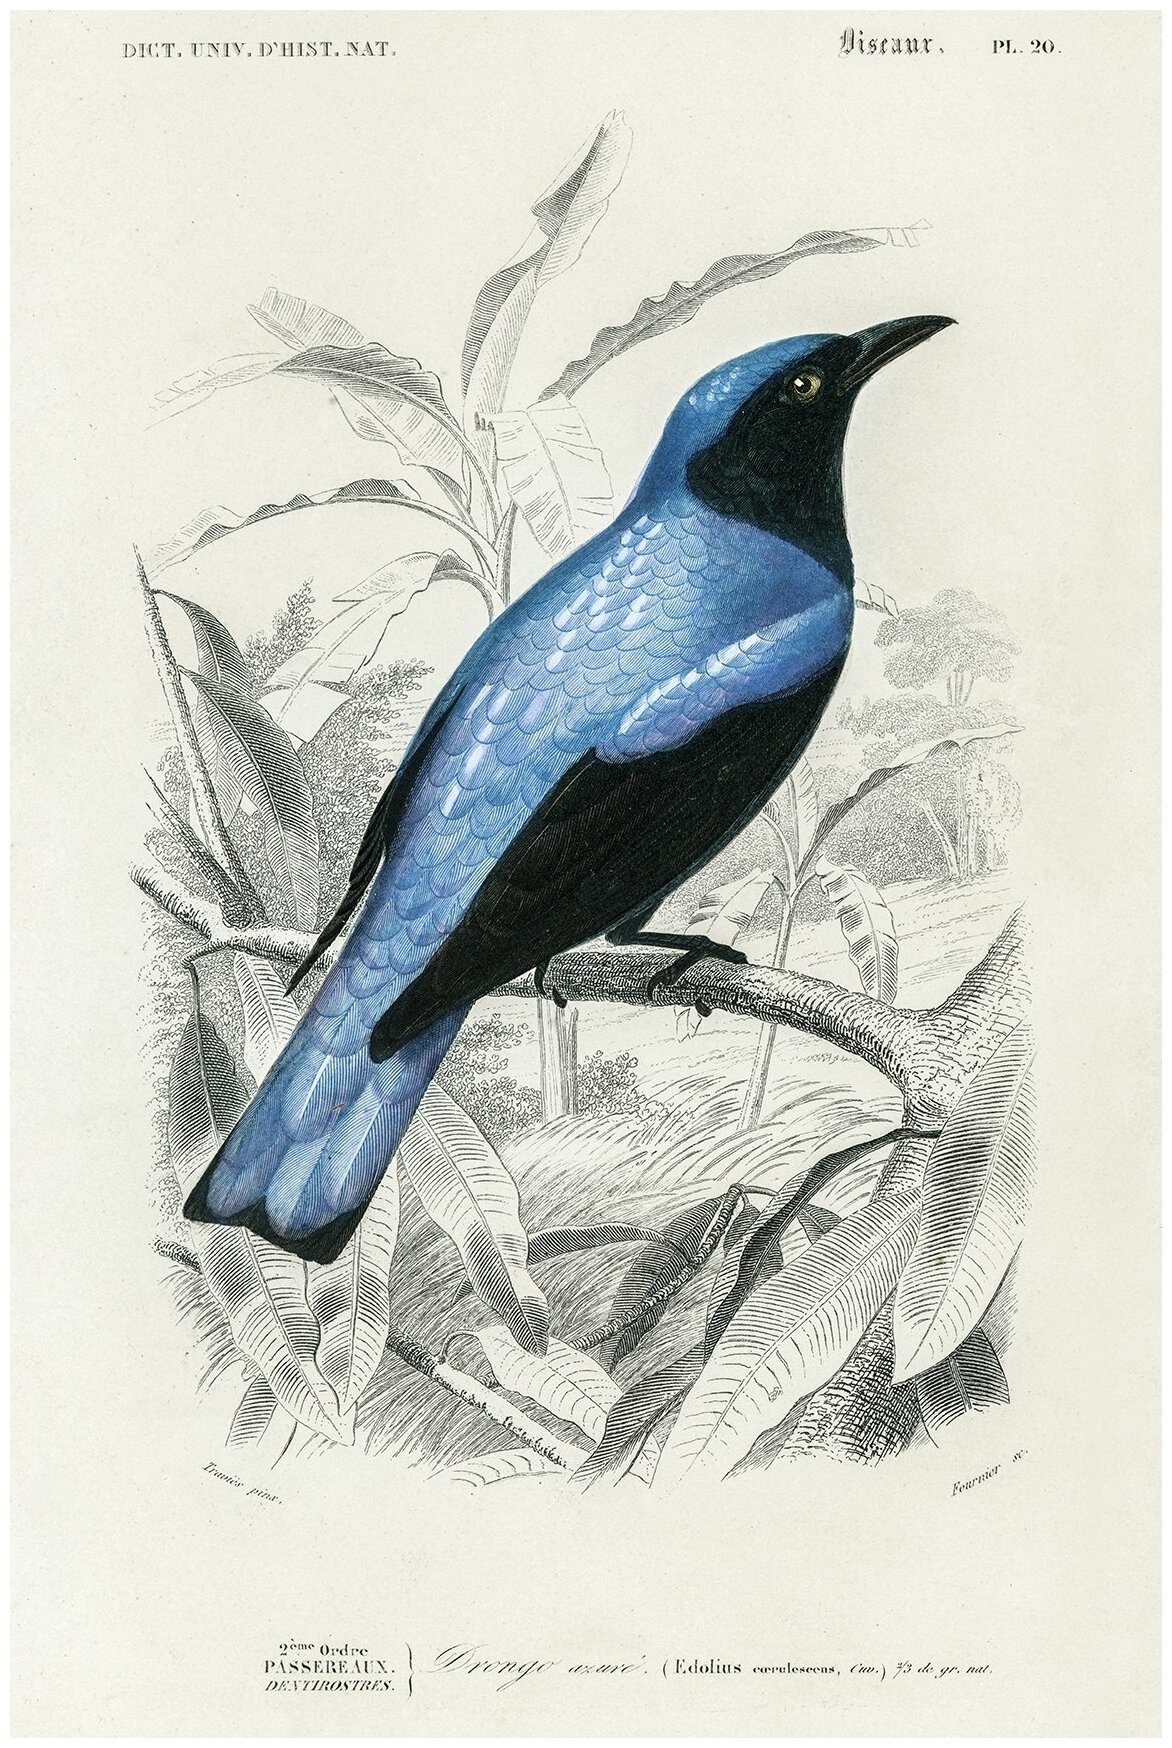 Постер / Плакат / Картина на холсте Птица Дронго с квадратным хвостом